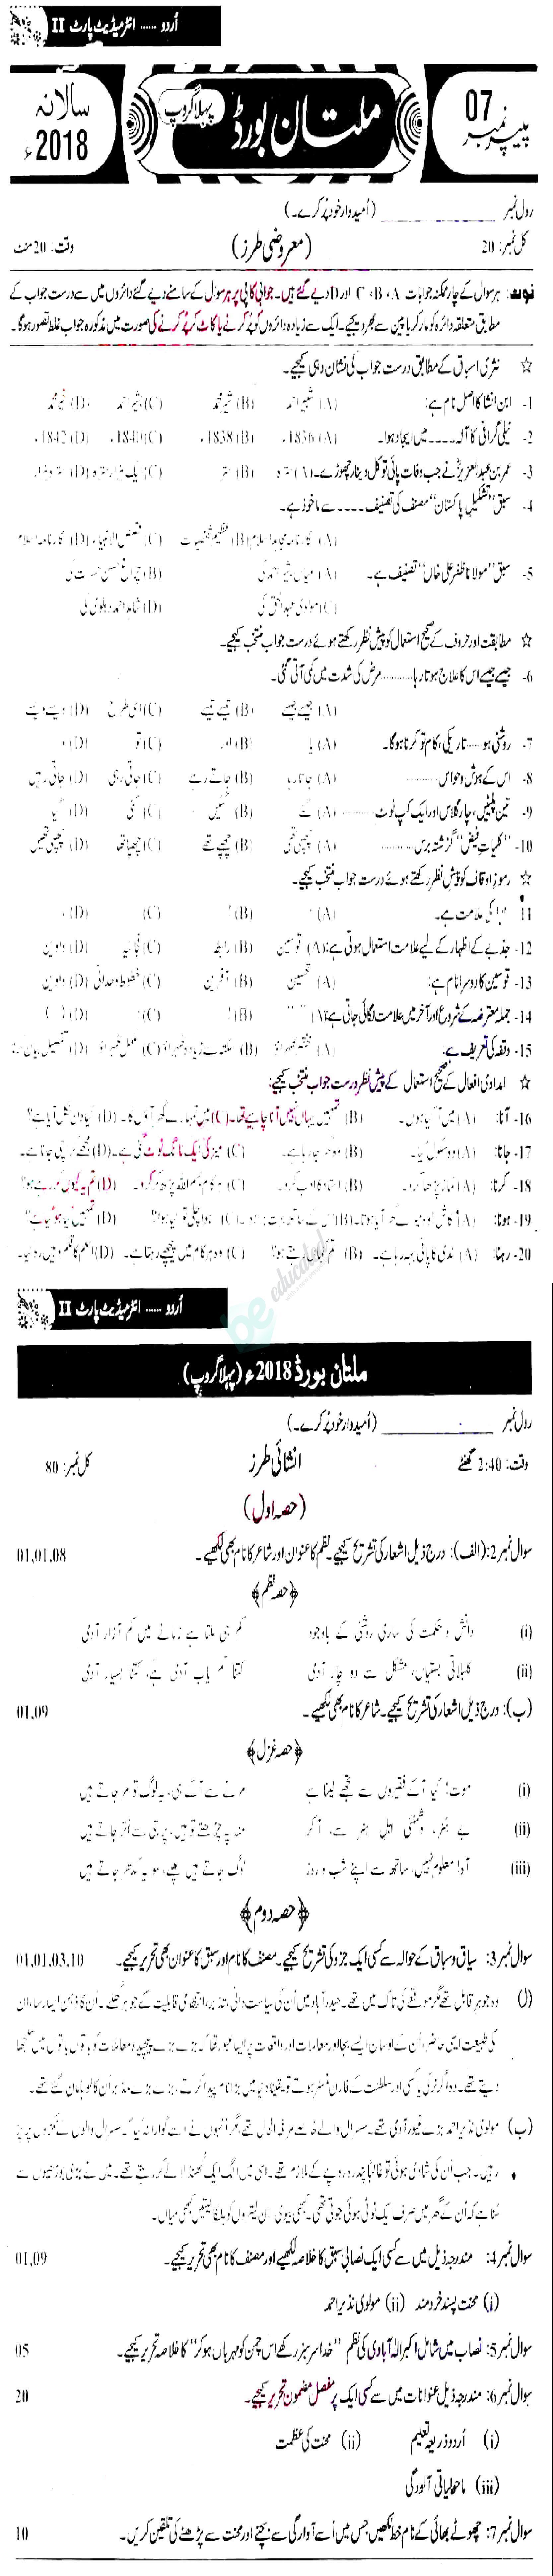 Urdu 12th class Past Paper Group 1 BISE Multan 2018